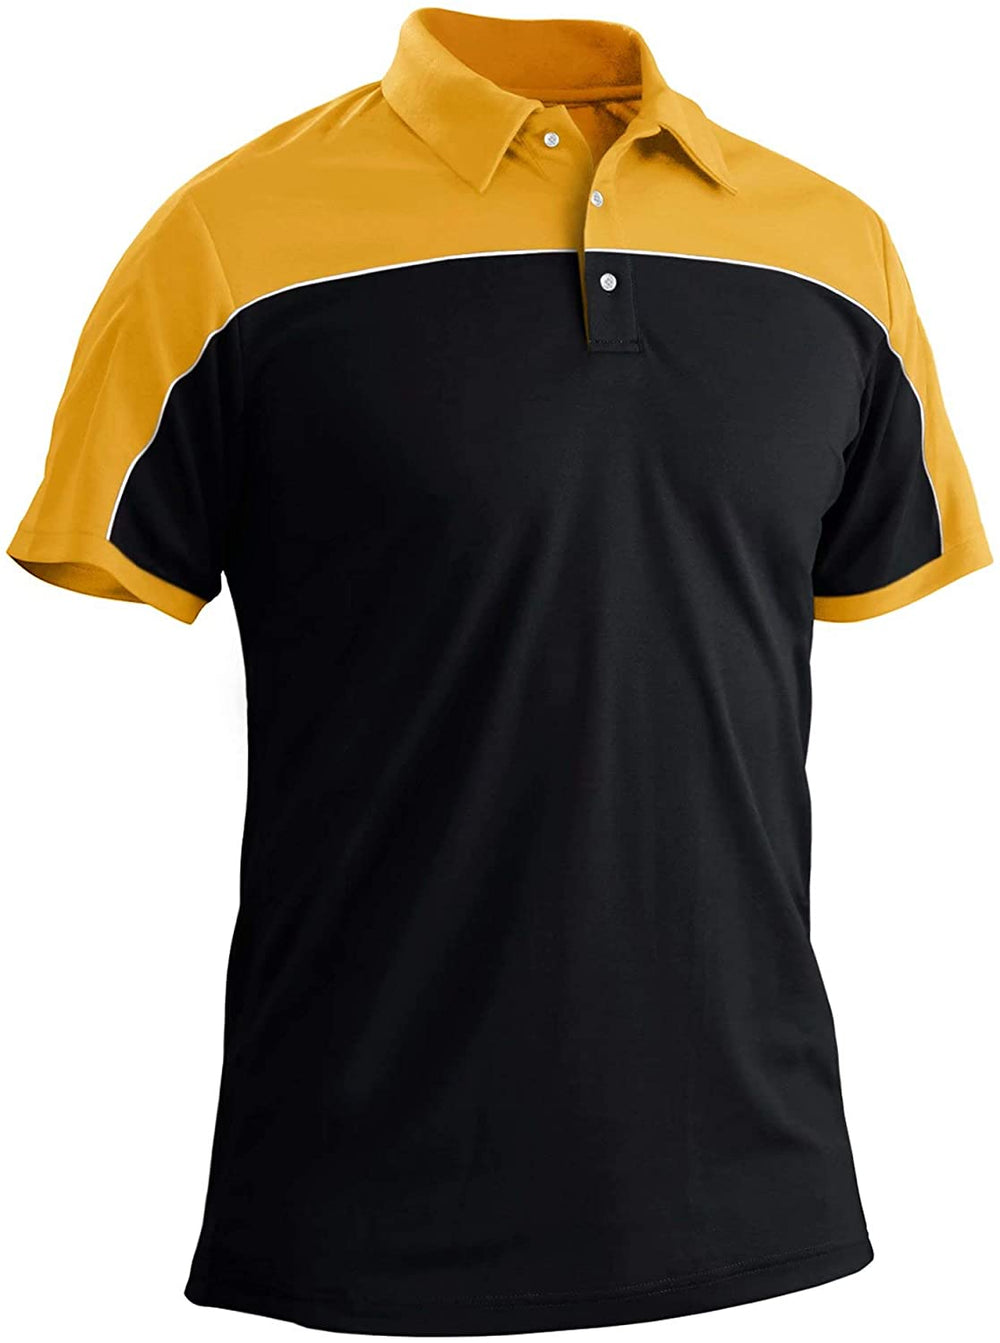 Men's Short Sleeve Golf Tennis Shirts - Wespornow